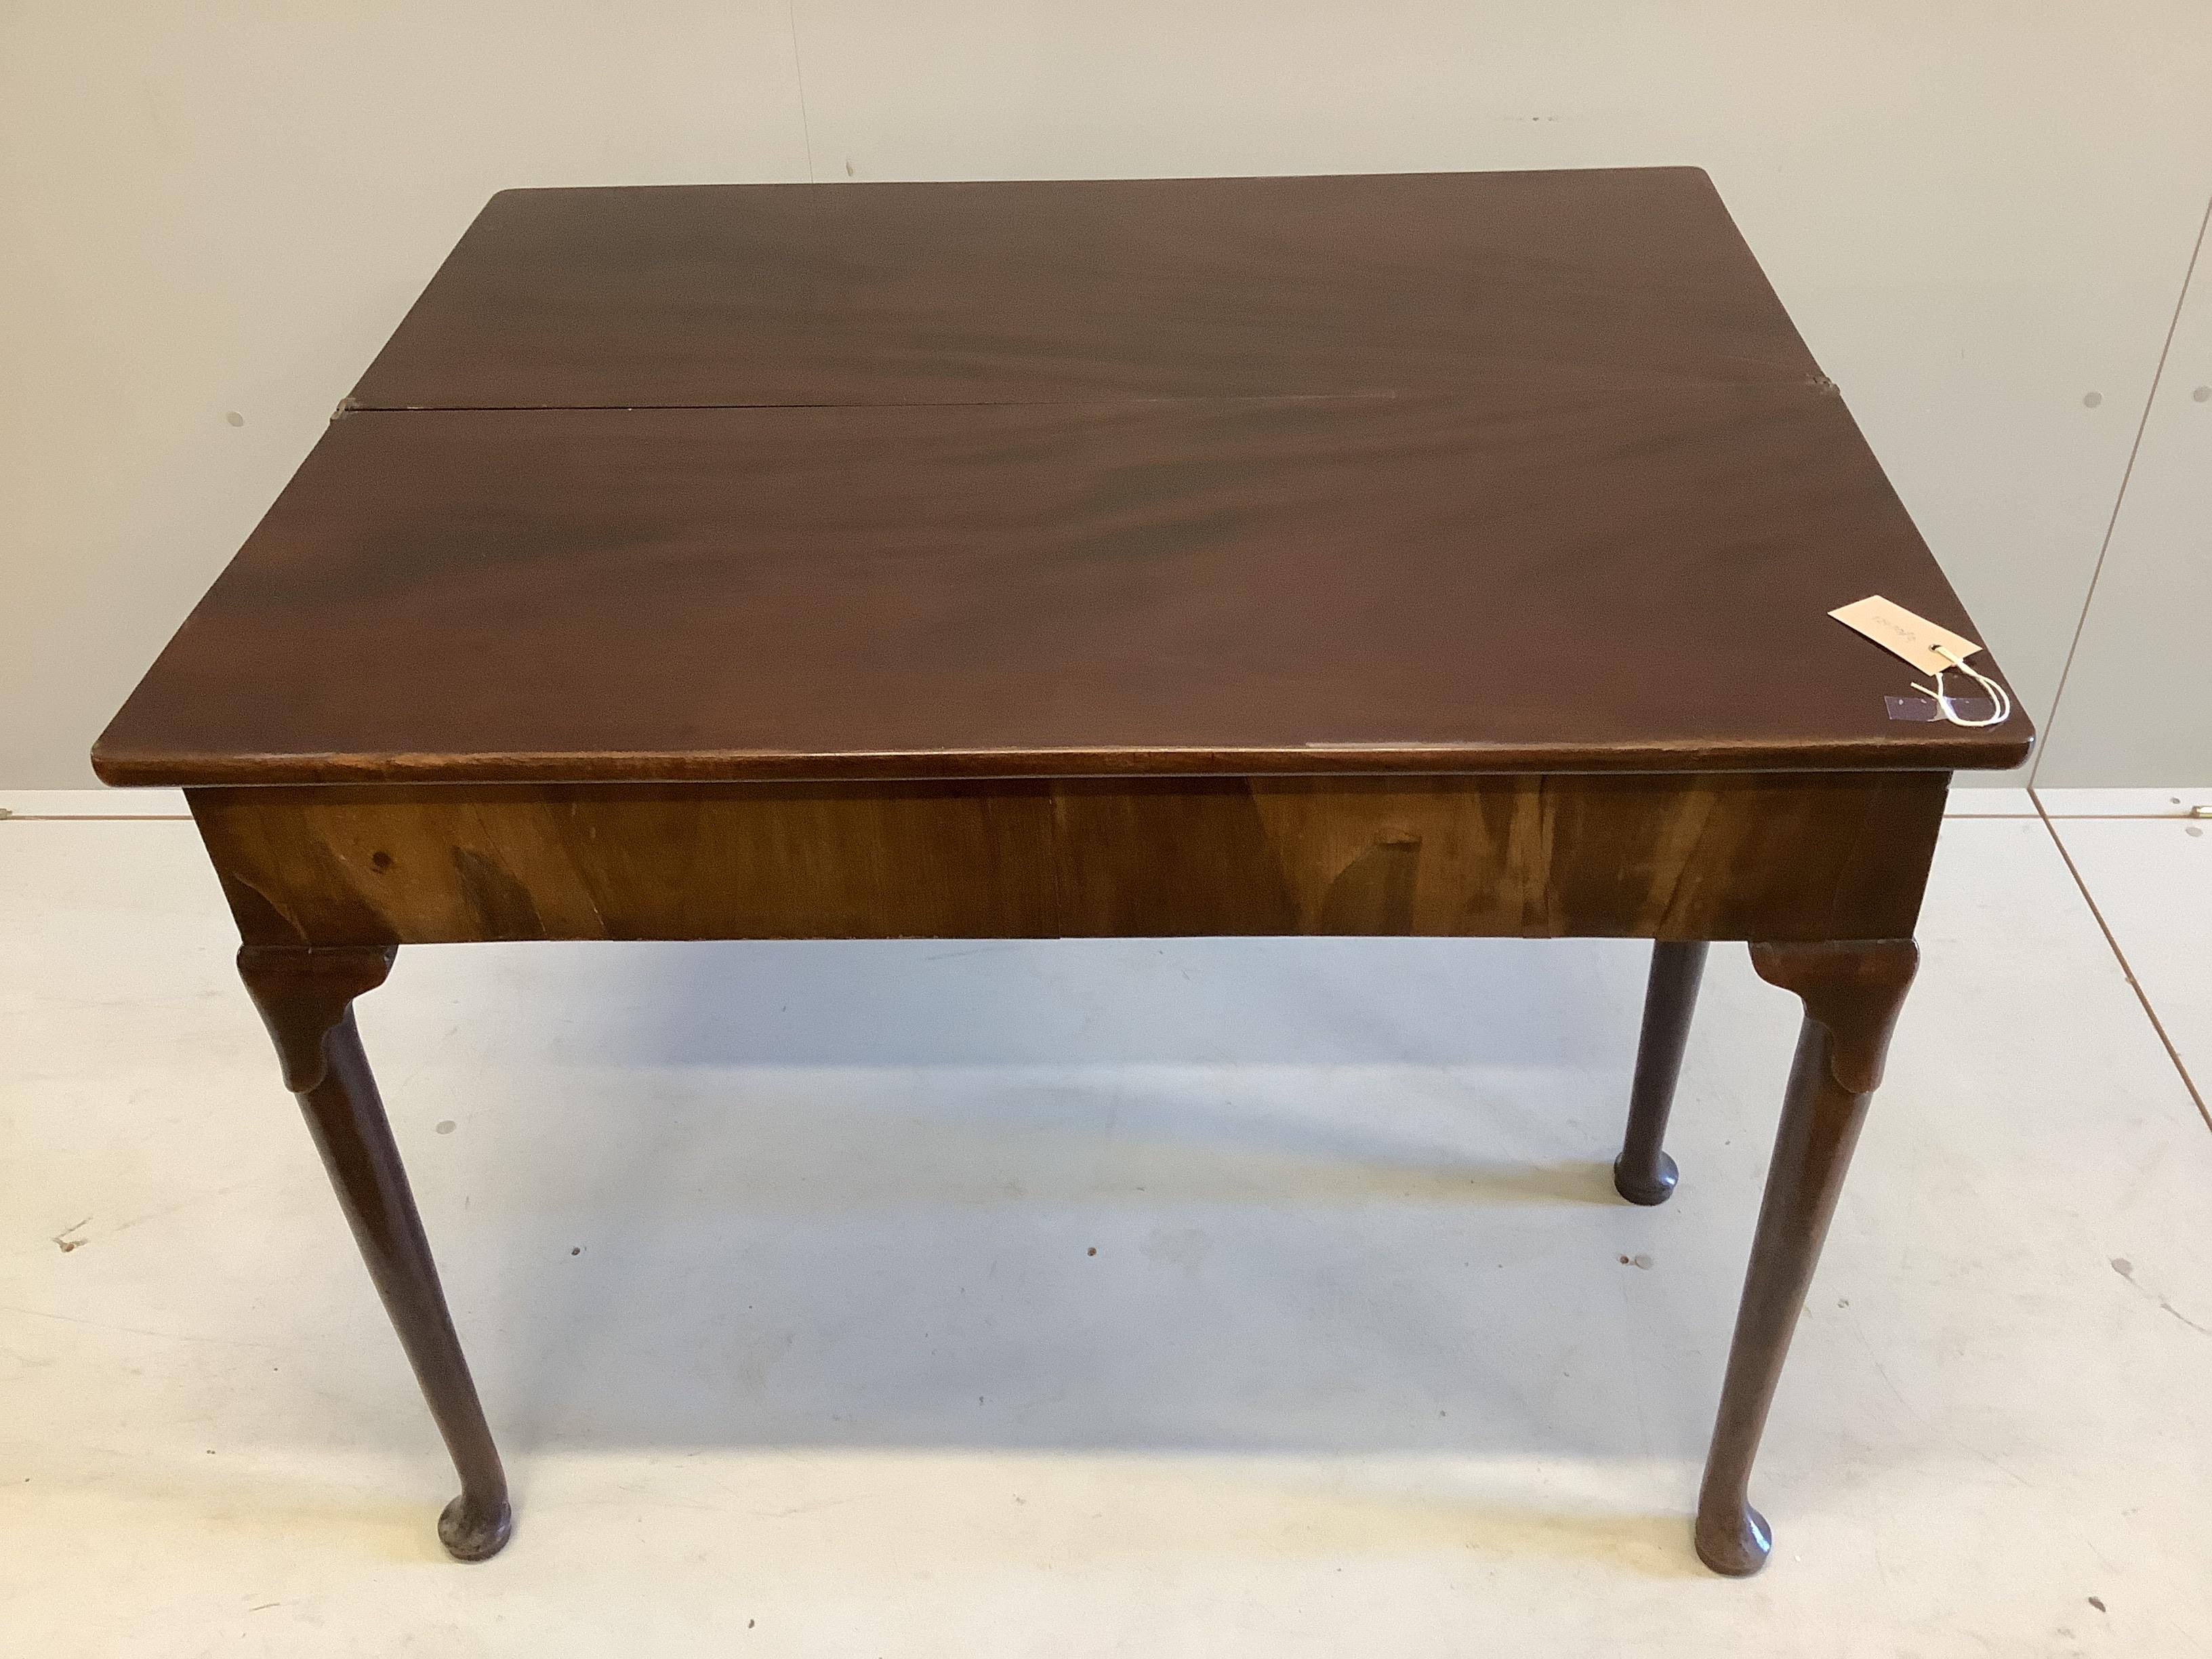 A George III rectangular mahogany folding tea table, width 97cm, depth 39cm, height 75cm